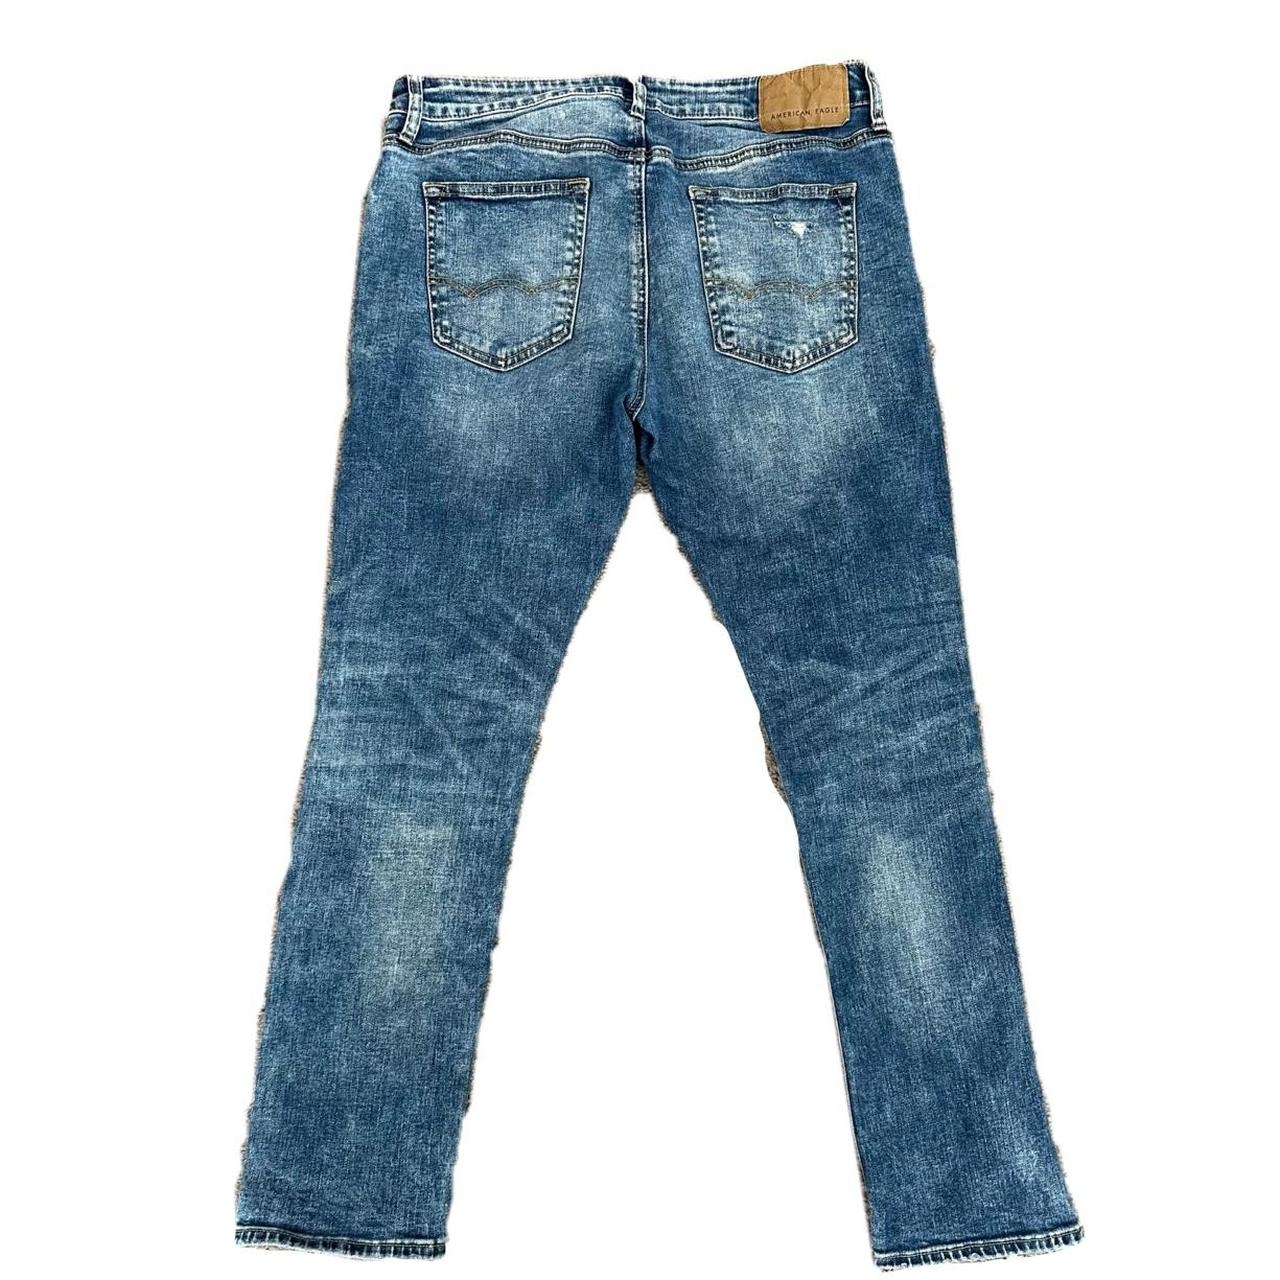 X RAY Skinny Jeans for Boys Slim Fit Denim Pants, Med Blue - No